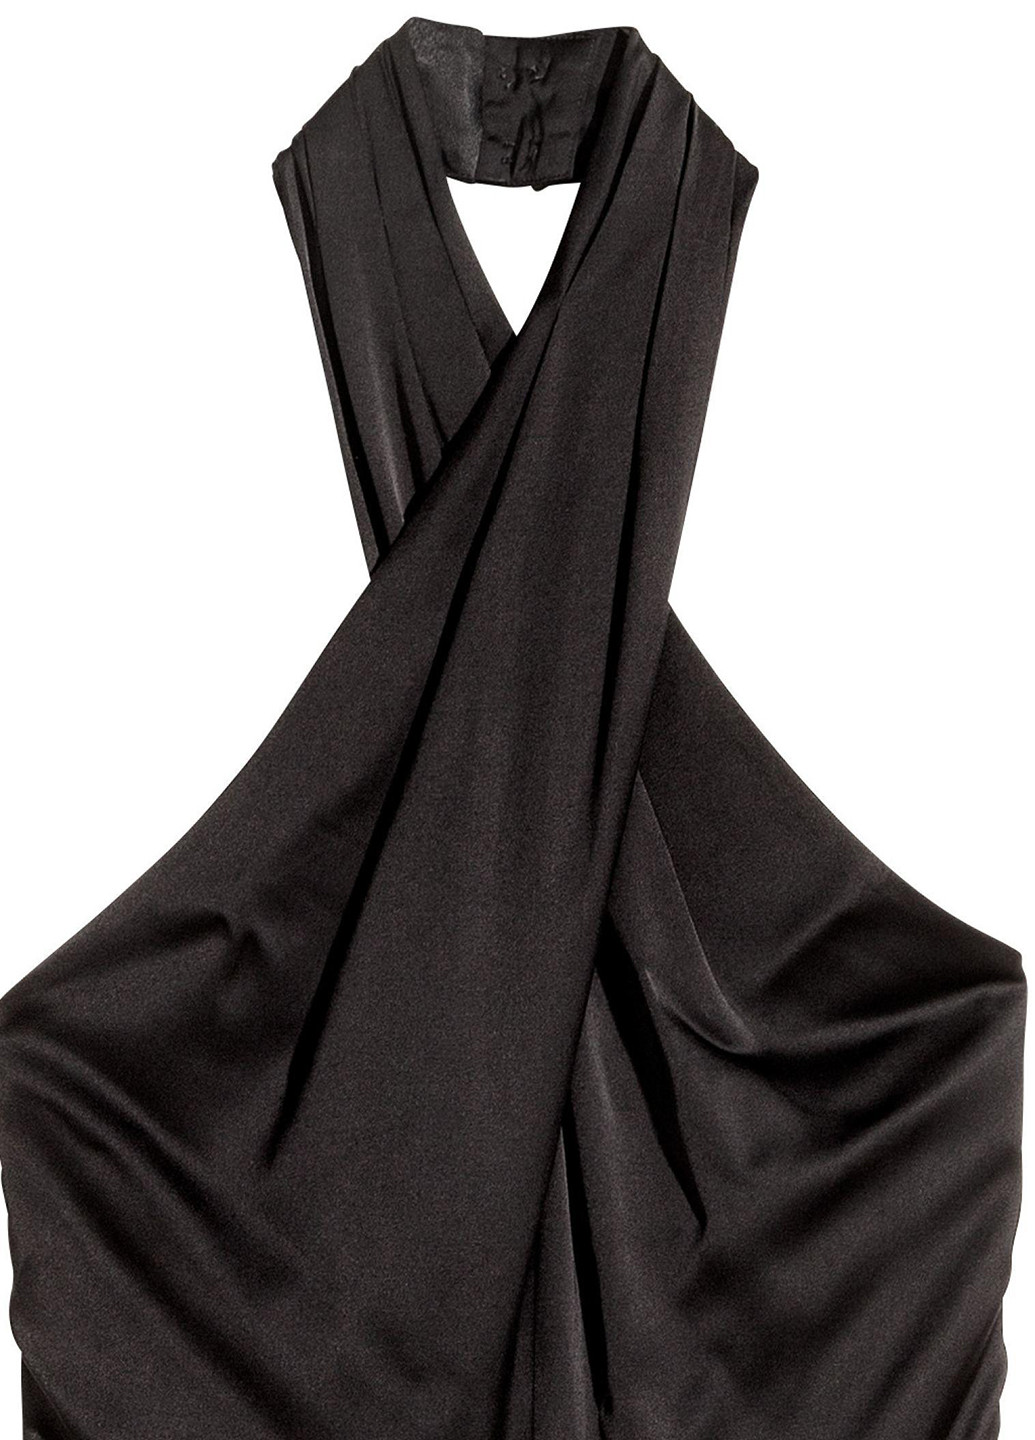 Комбинезон H&M комбинезон-брюки однотонный чёрный кэжуал вискоза, атлас